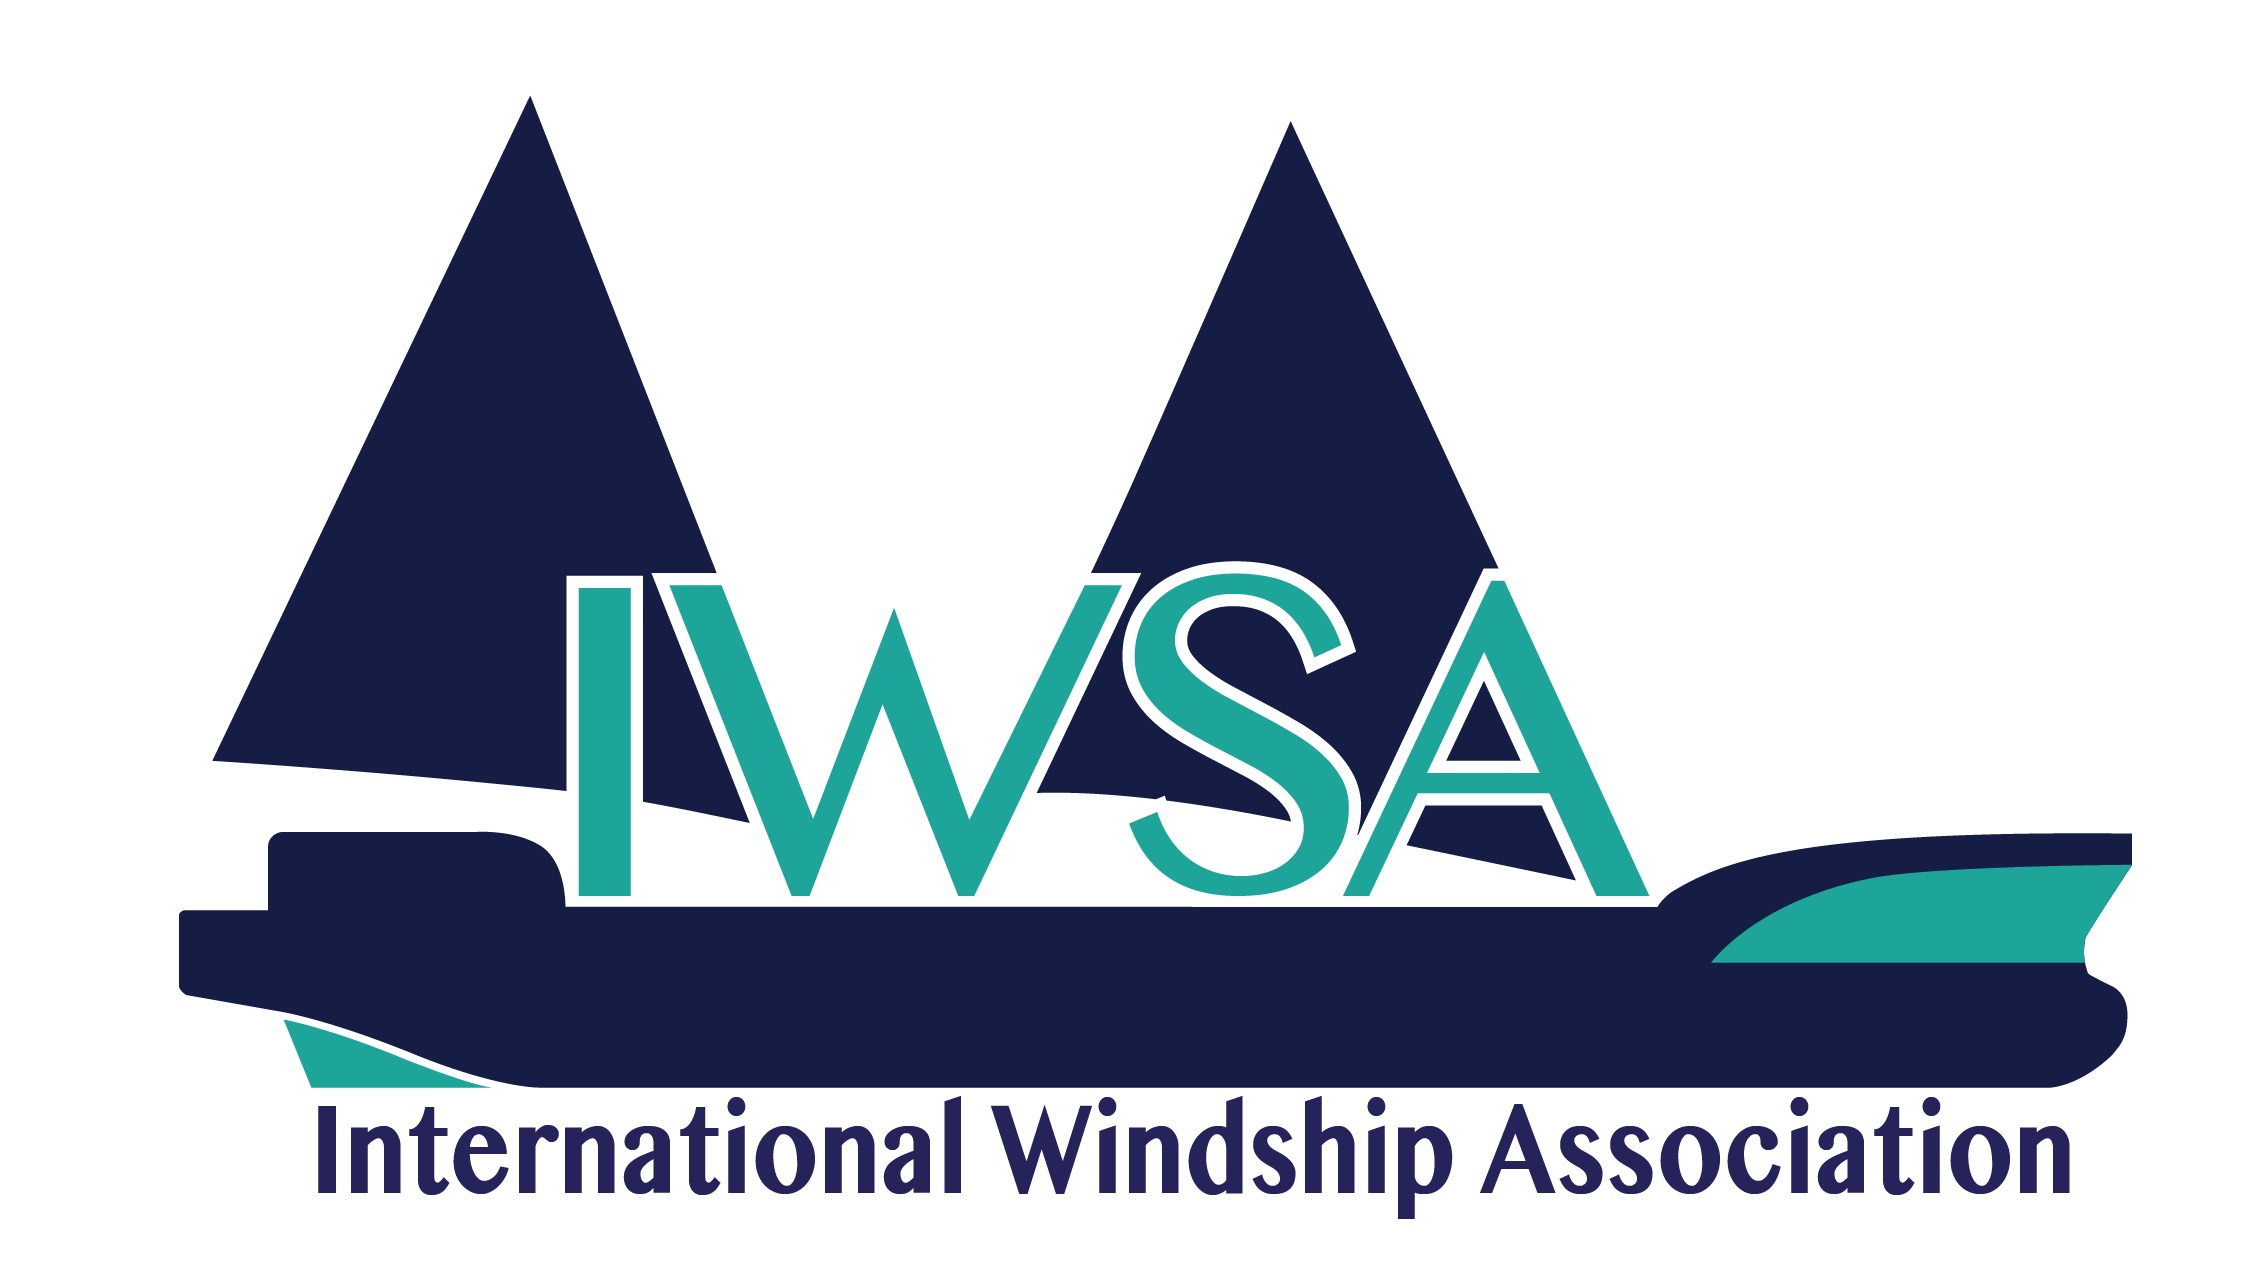 IWSA logo JPEG